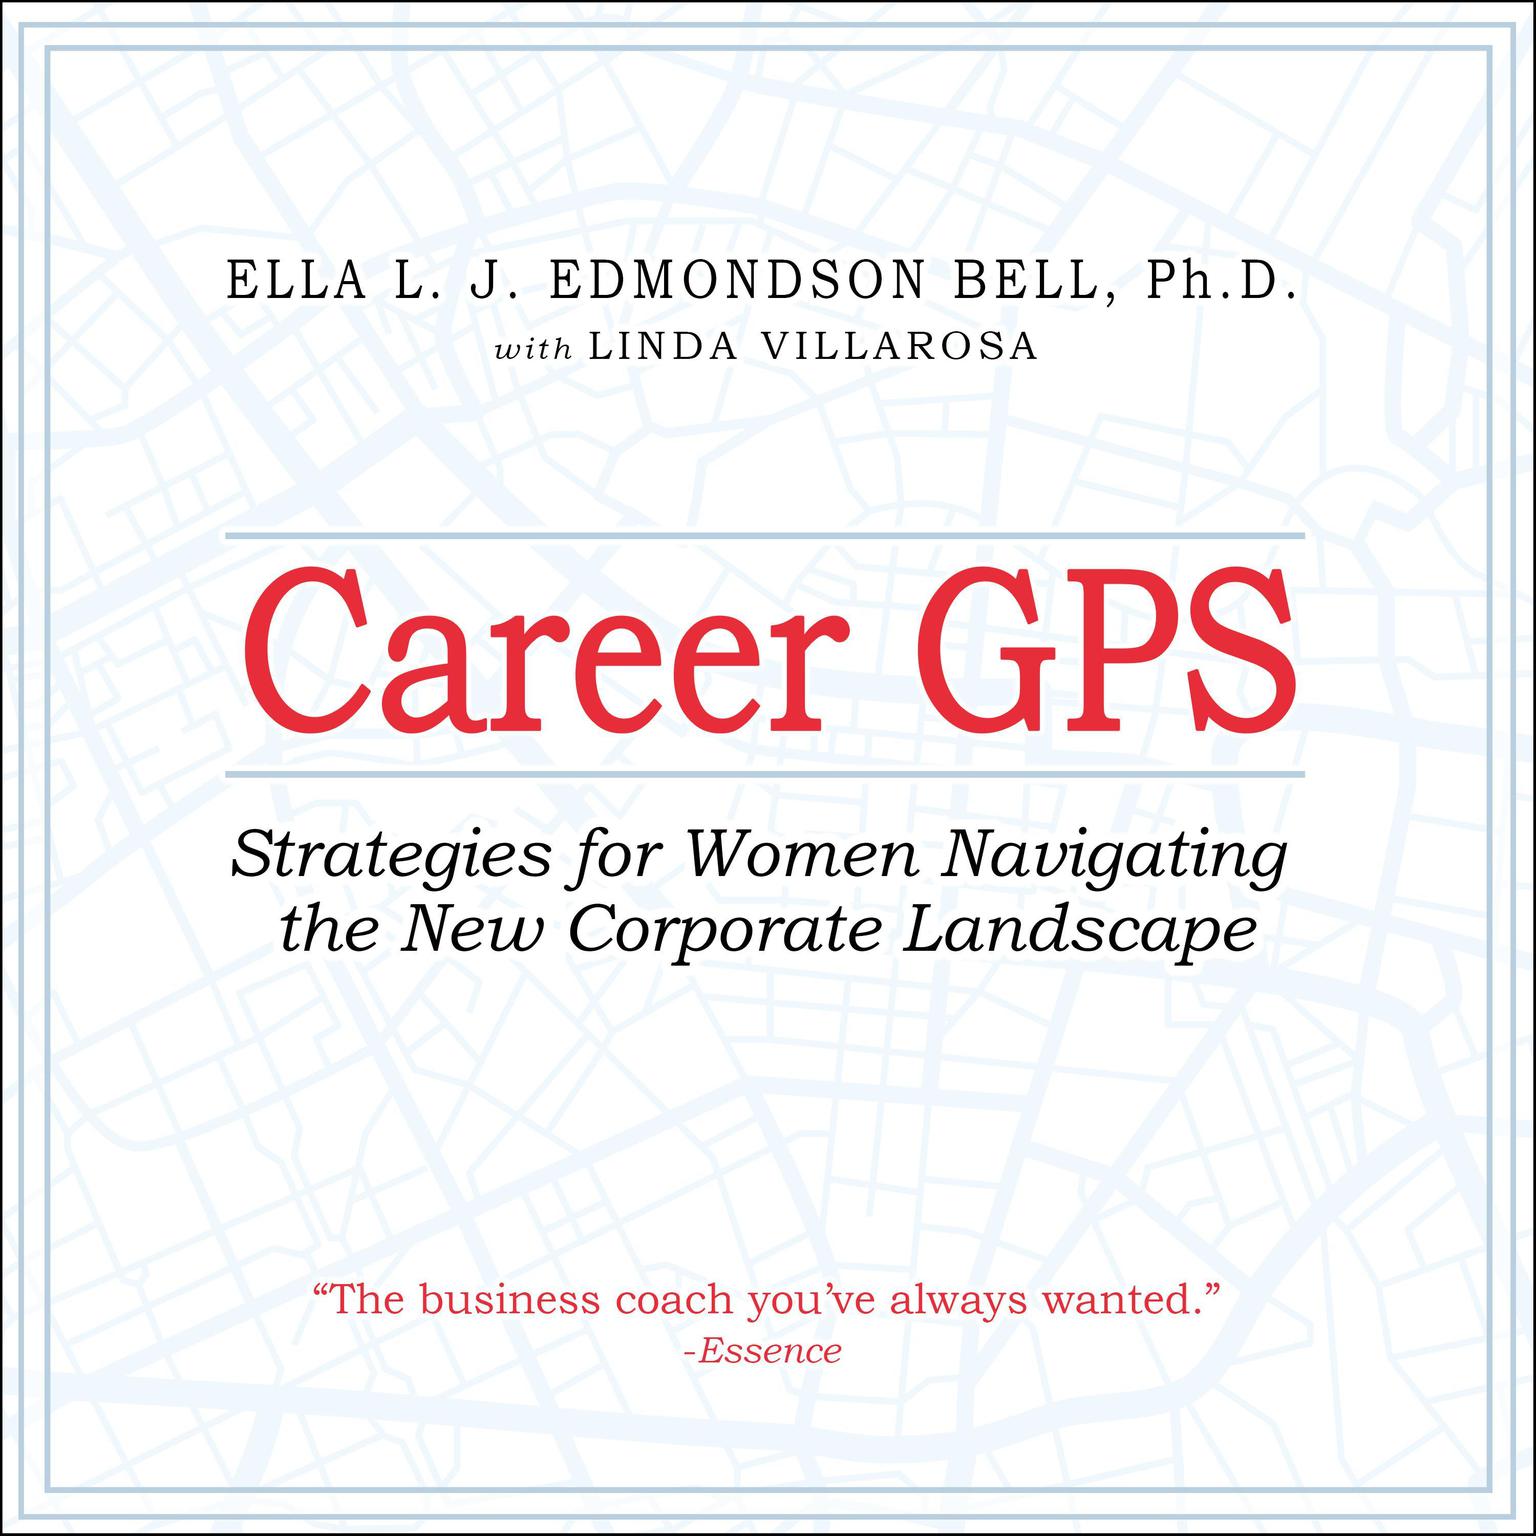 Career GPS: Strategies for Women Navigating the New Corporate Landscape Audiobook, by Ella L. J. Edmondson Bell